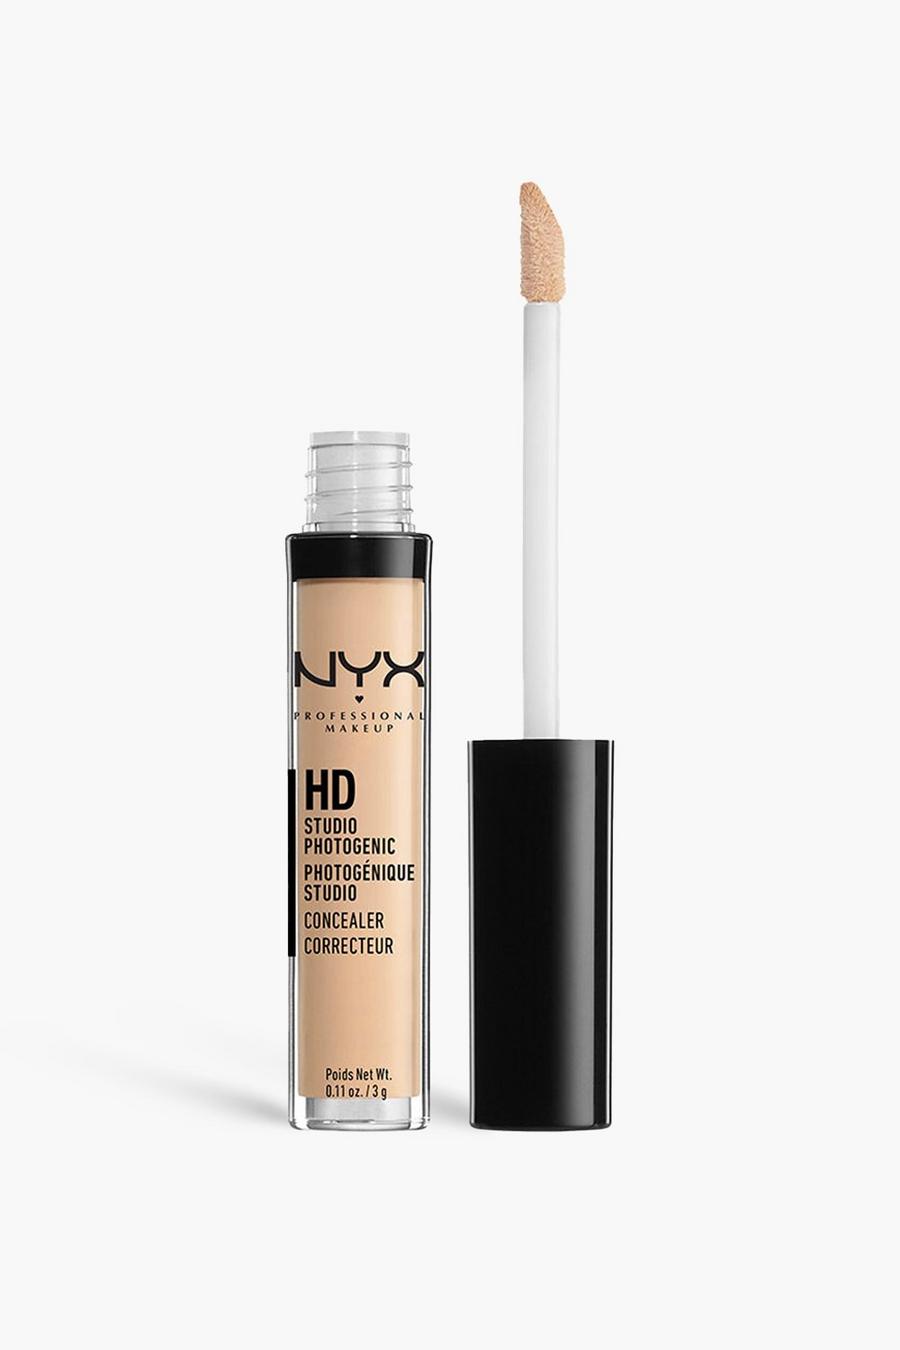 NYX Professional Makeup - Correcteur - HD Photogenic, 3.5 nude beige